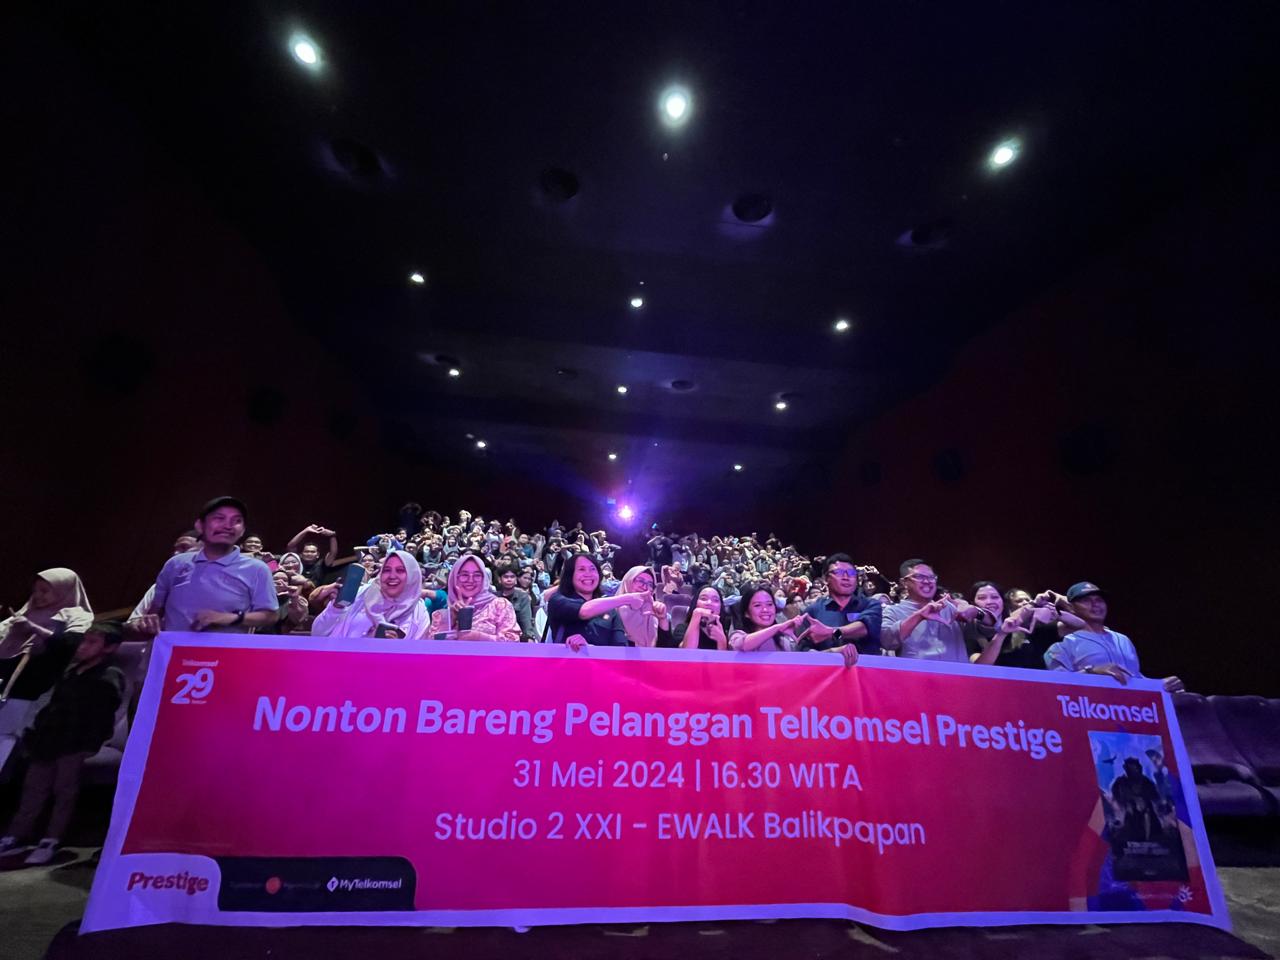 Telkomsel Nonton Bareng di Balikpapan, Apresiasi bagi Pelanggan Setia Telkomsel Prestige pada Jumat 31 Mei 2024